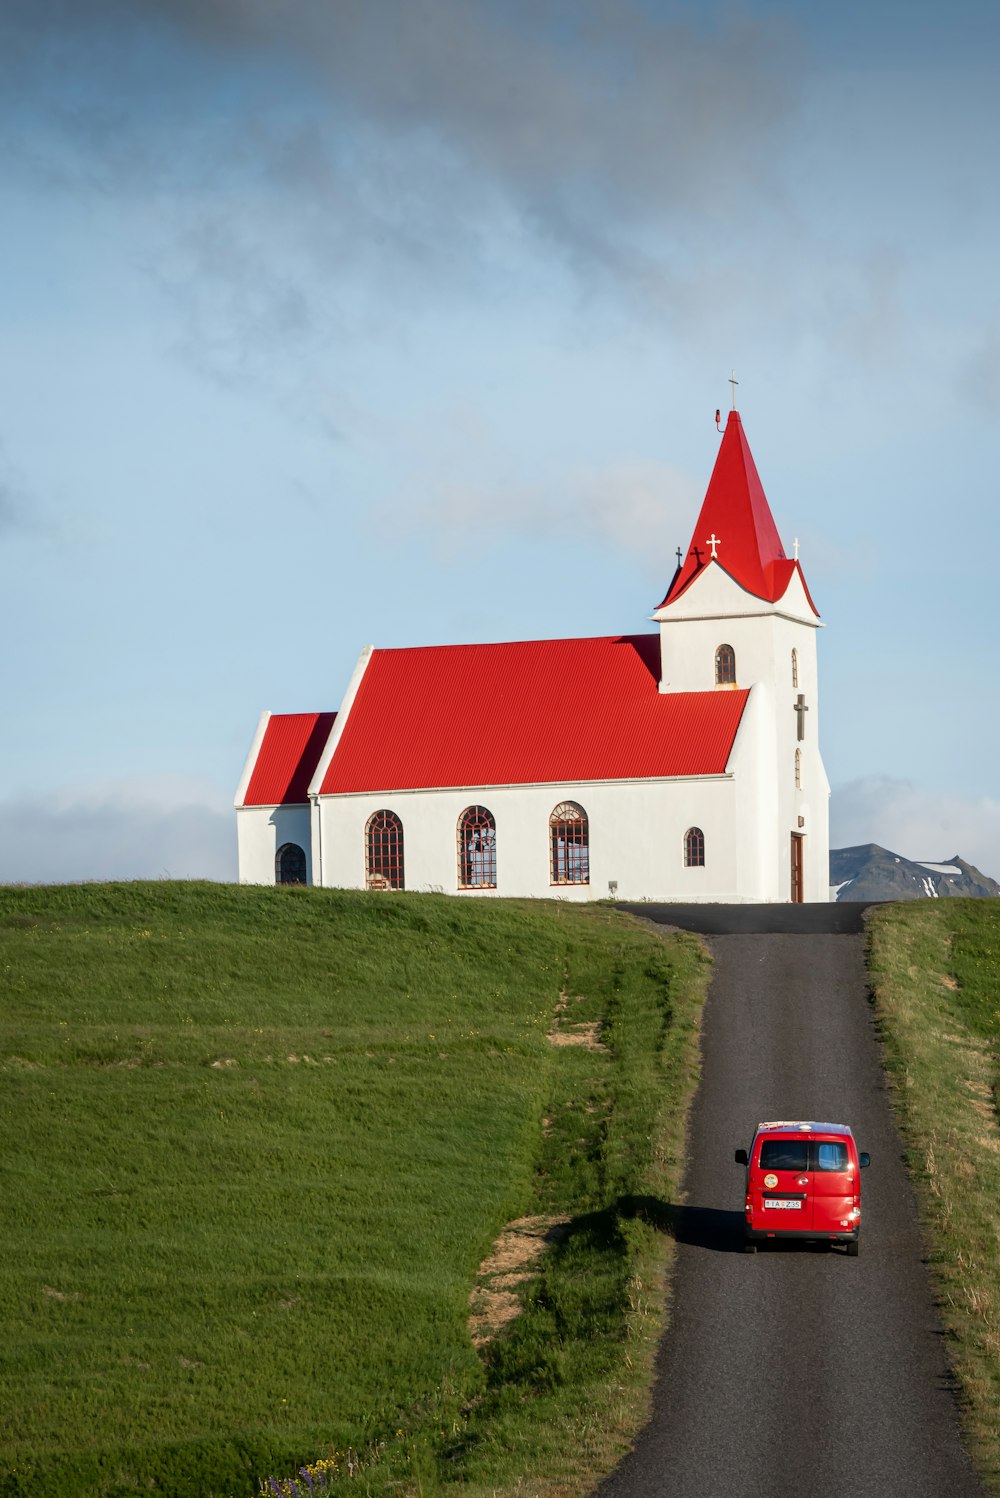 a red car driving down a road next to a white church